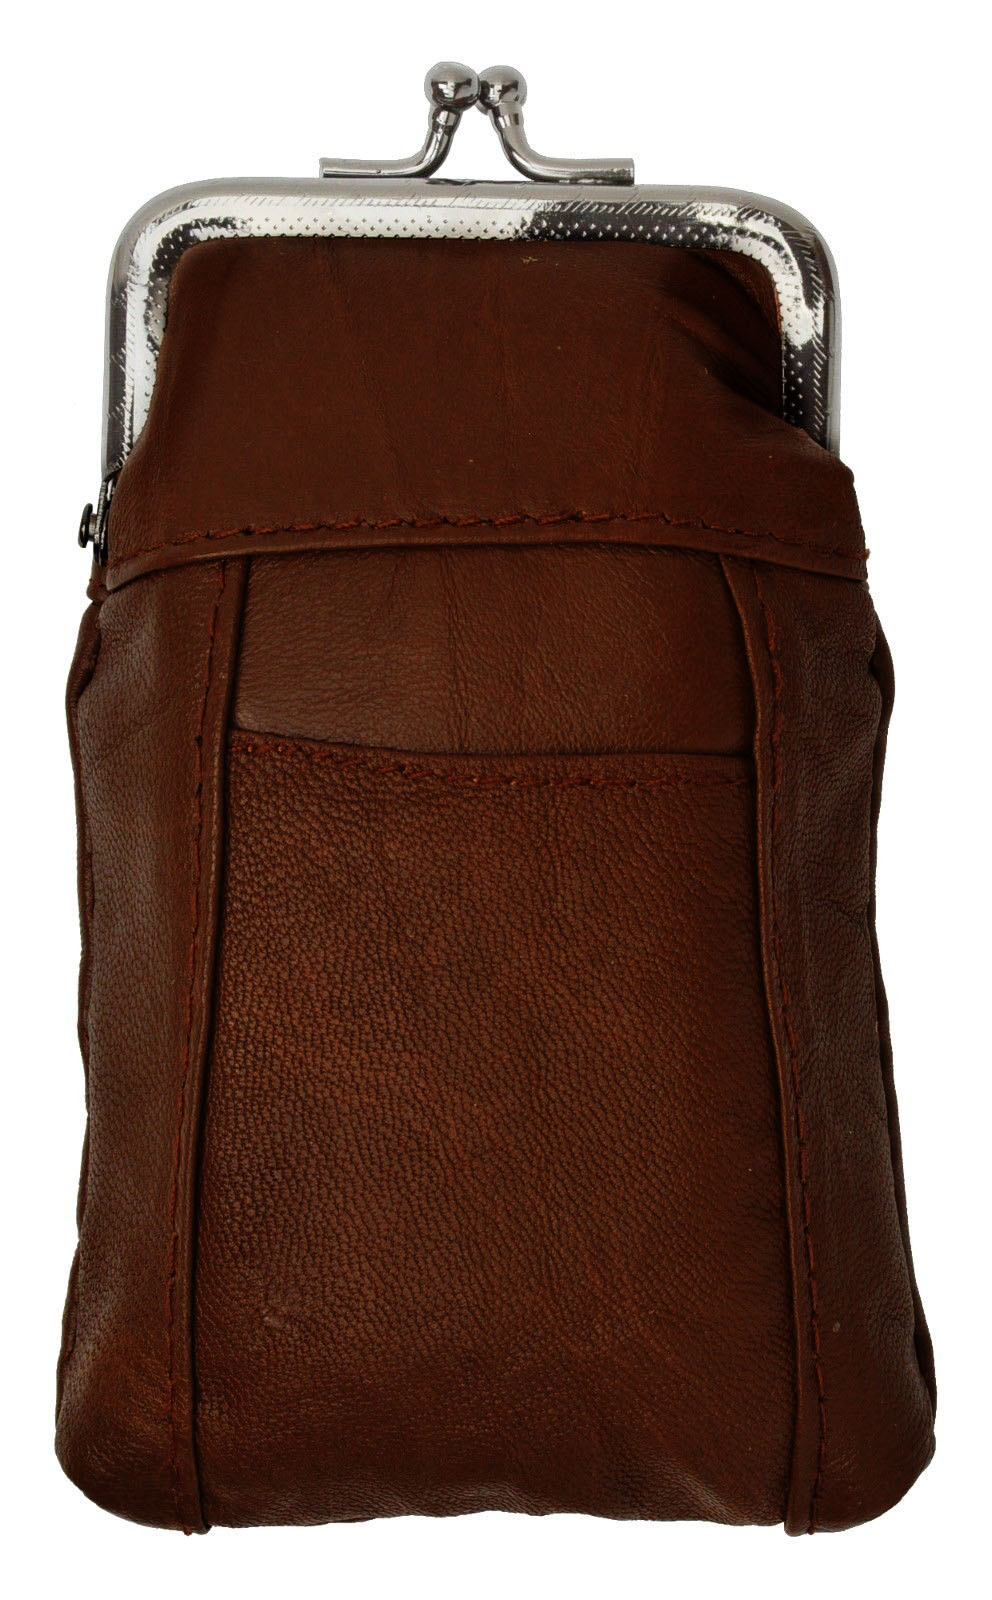 Genuine Leather Cigarette Soft Case Tobacco lighter Holder clasp for men women